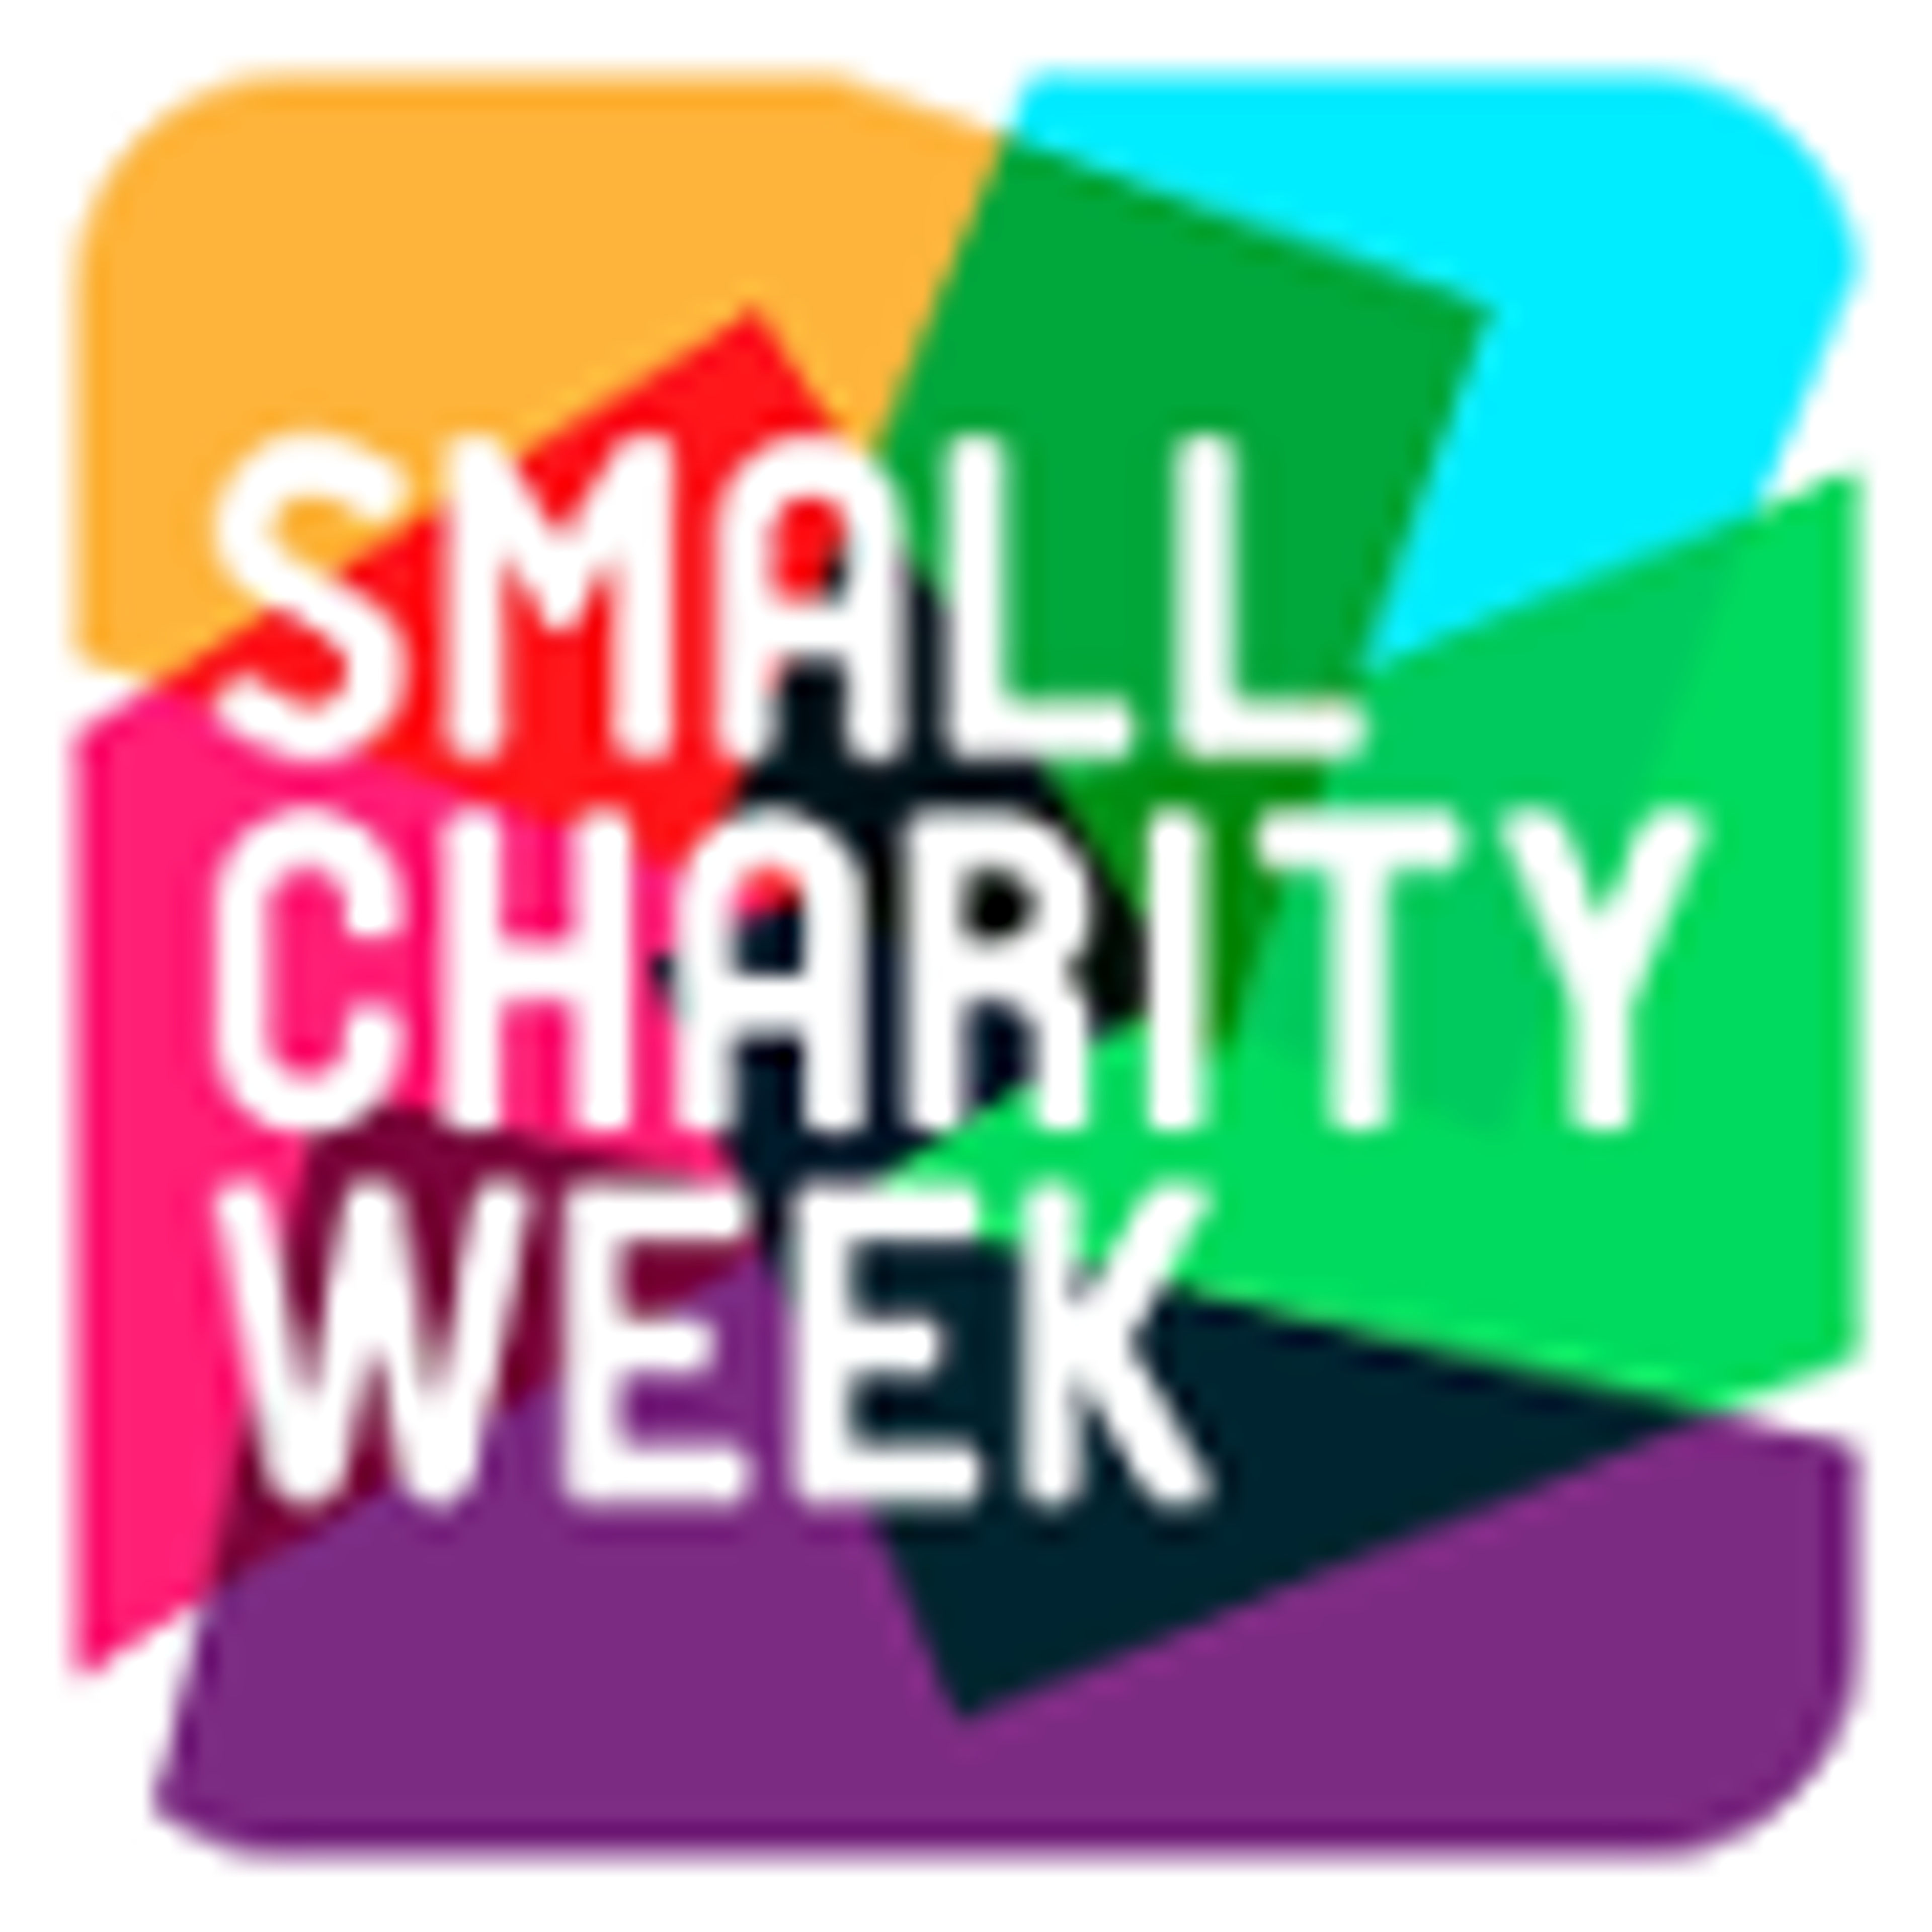 Small Charities Week logo